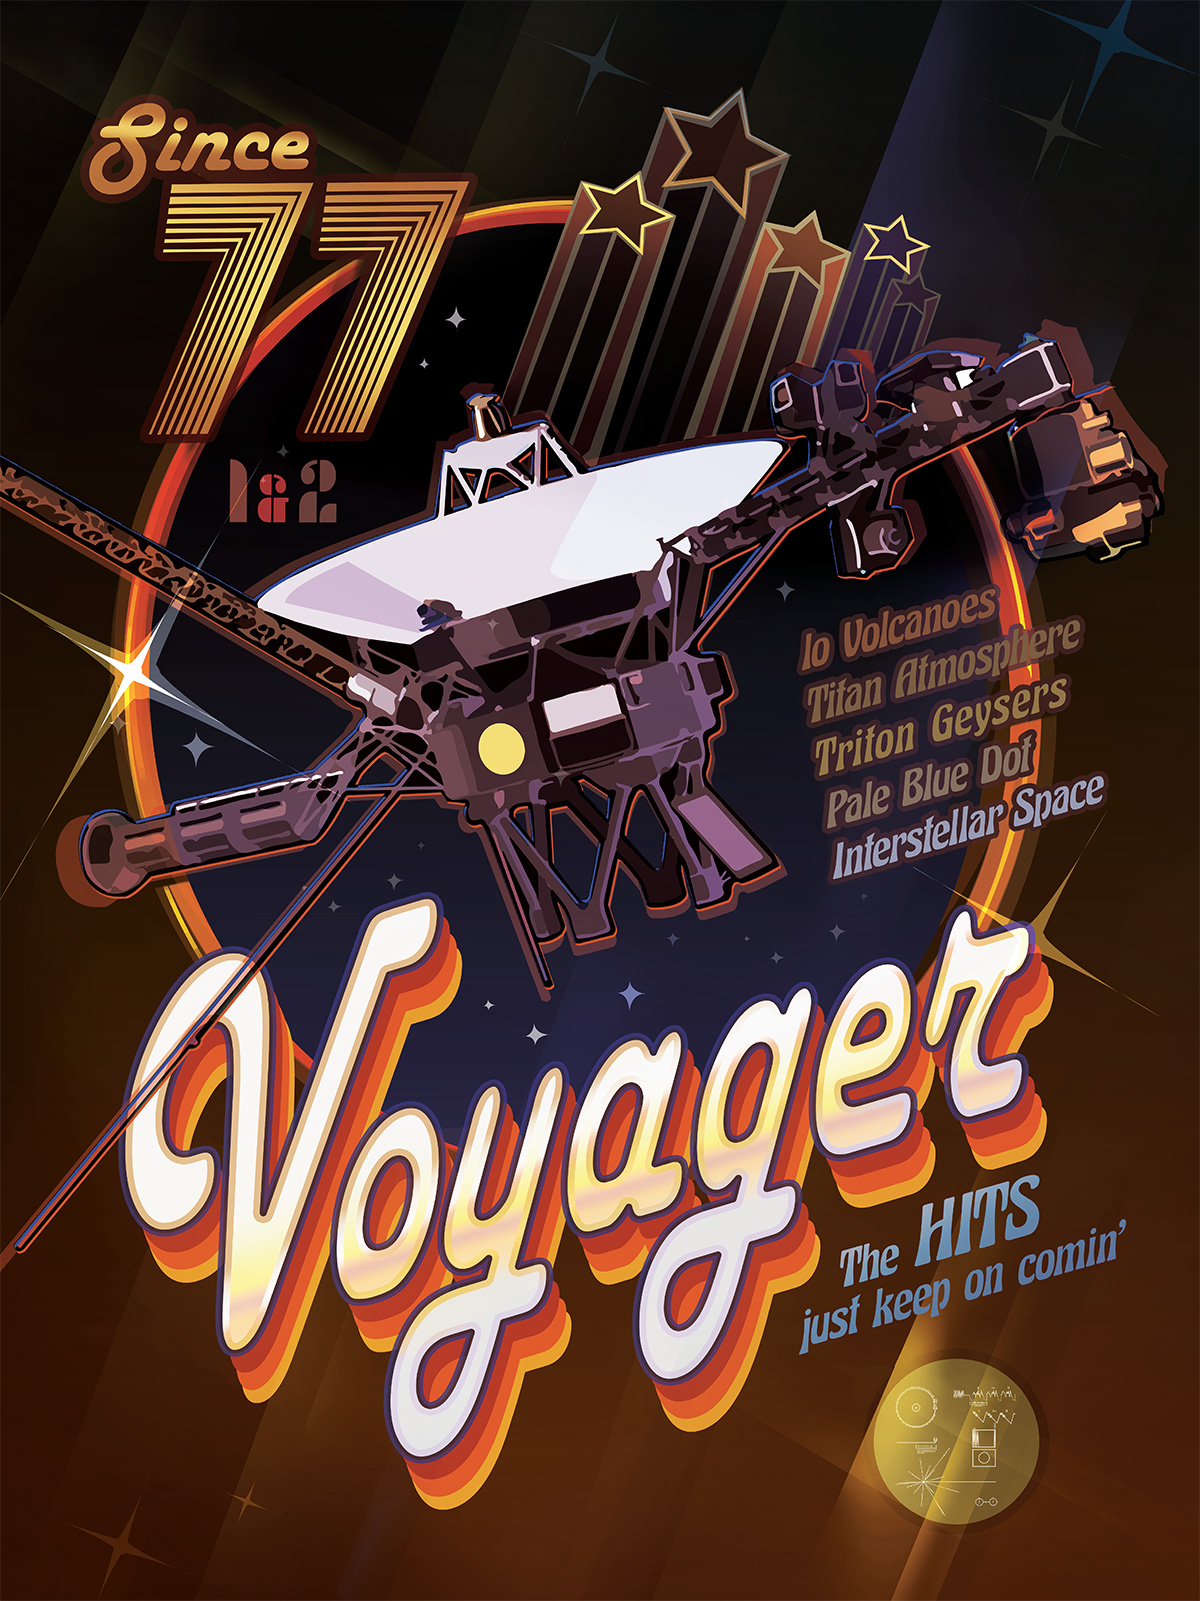 Retro disco poster celebrating Voyager